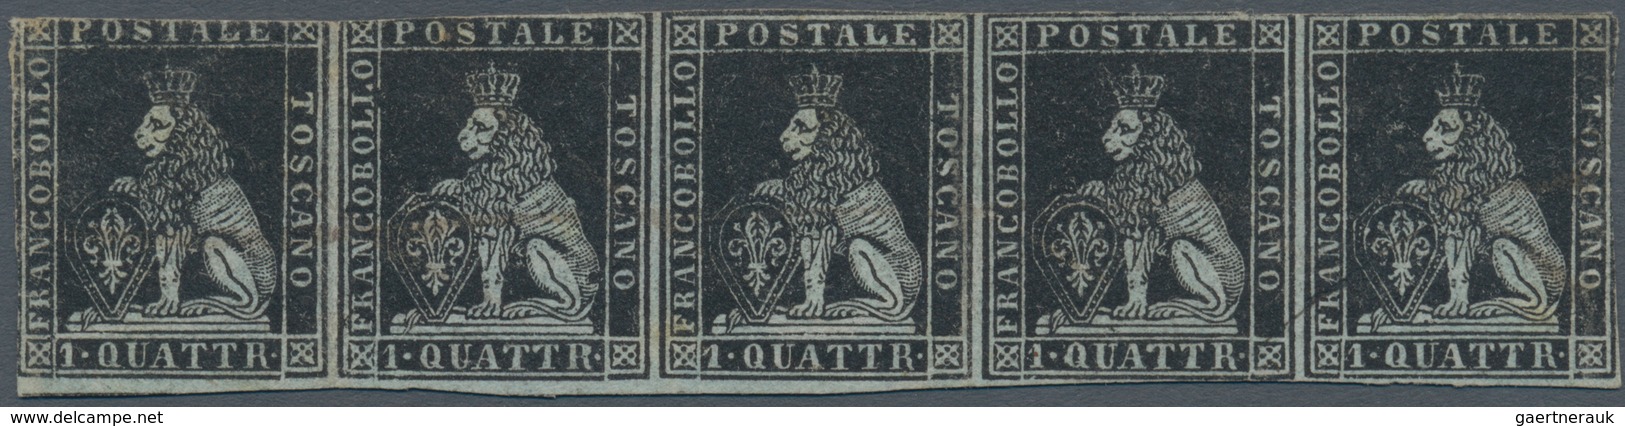 Italien - Altitalienische Staaten: Toscana: 1851, 1 Quattrino Black On Greyish Paper, Horizontal Str - Toscane